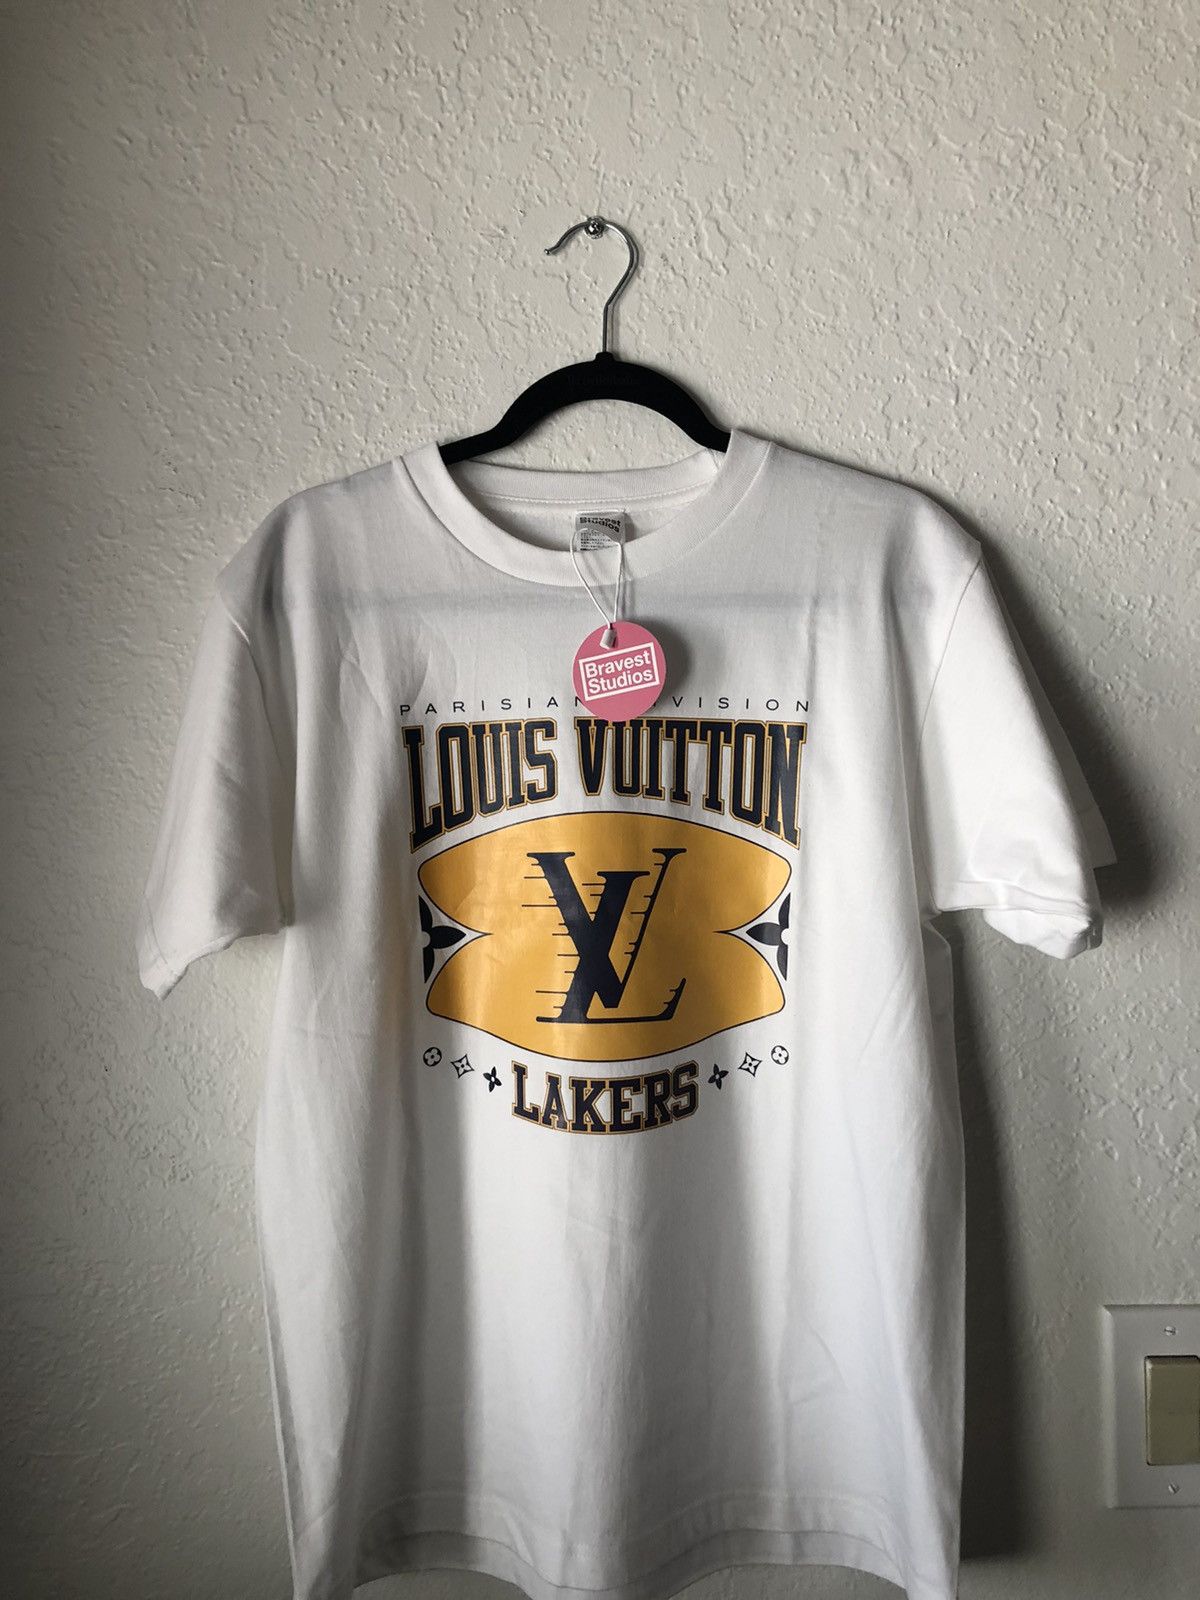 Bravest Studios Lakers x Louis Vuitton shirt in